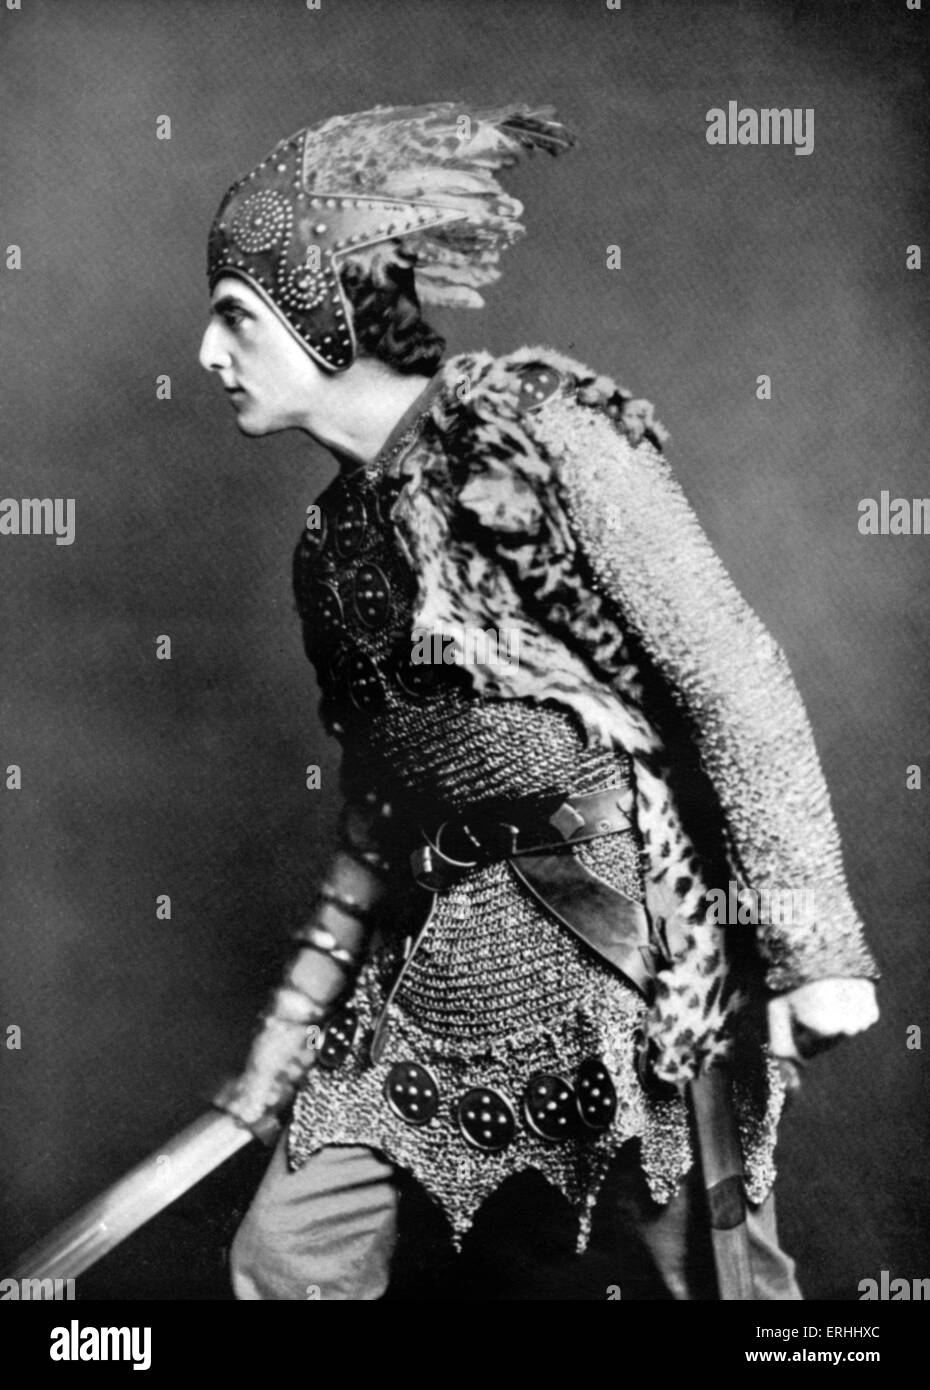 William Shakespeare 's play 'Hamlet' - Act IV, scene 5: Walter Hampden as Laertes, Royal Adelphi Theatre, London, 1905. Stock Photo